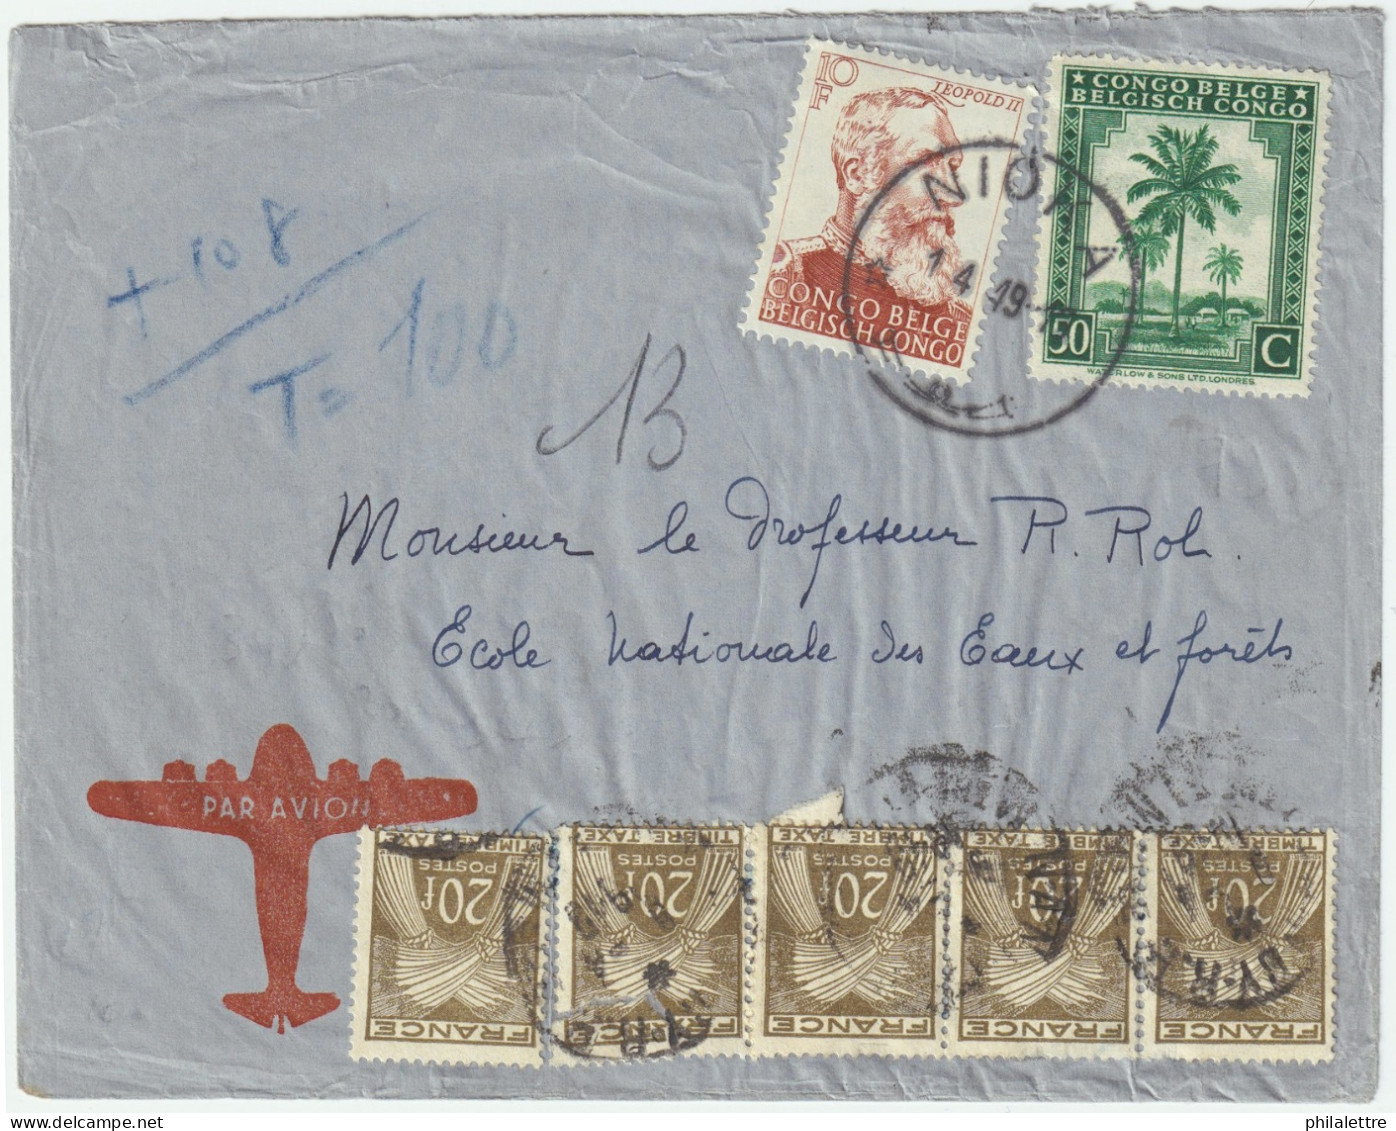 CONGO BELGE Pour La FRANCE - 1949 LSC AVION Affranchie 10fr50c From NIOKA To NANCY, Taxée 100fr (5x20fr Type Gerbes) - 1859-1959 Briefe & Dokumente